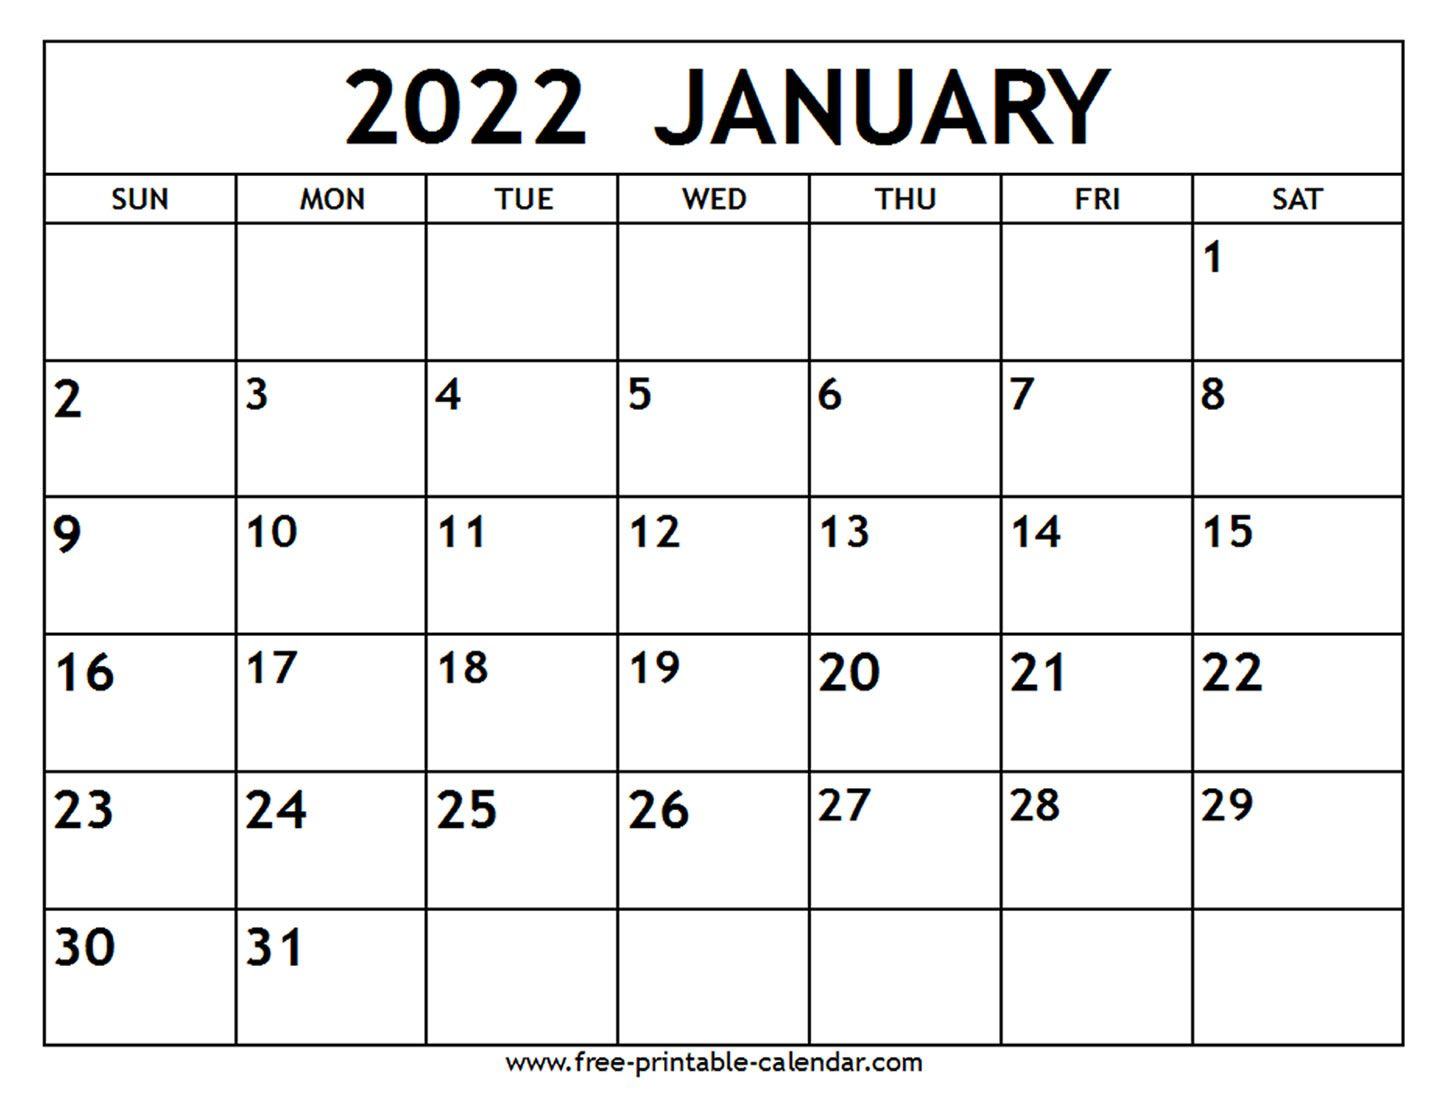 January 2022 Calendar - Free-Printable-Calendar